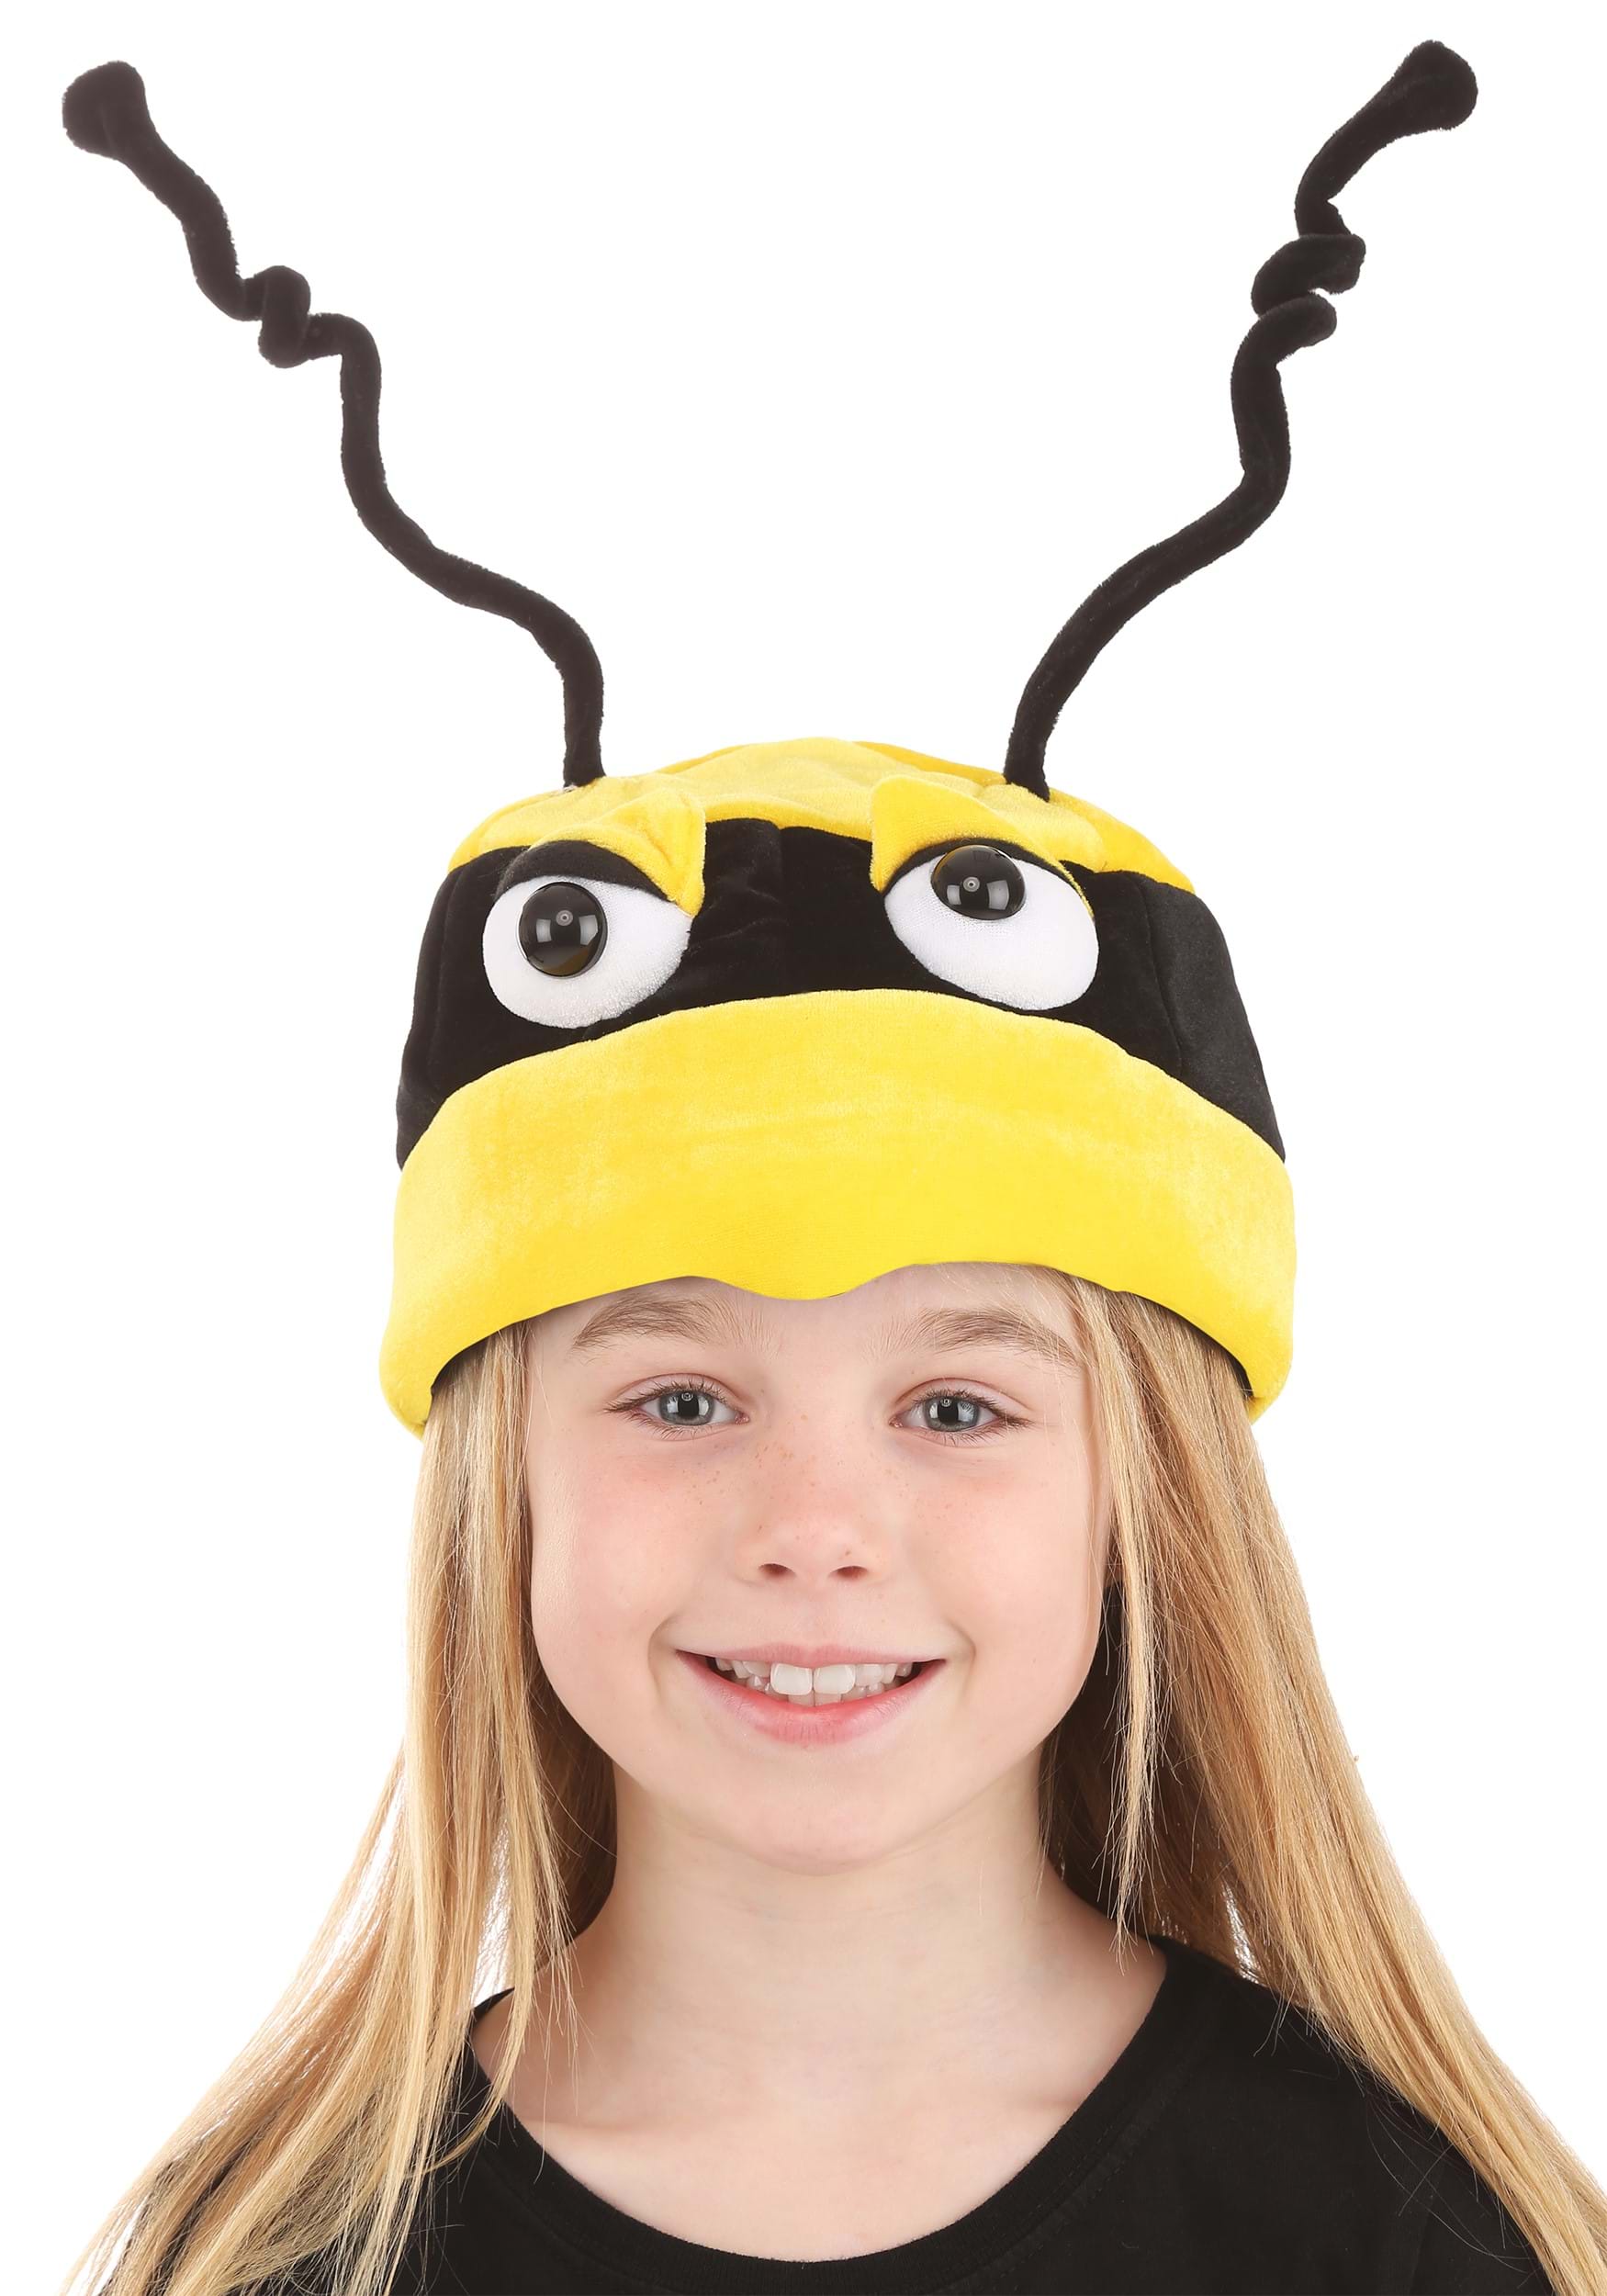 Kids Tights - Black & Yellow Bumble Bee Stripes